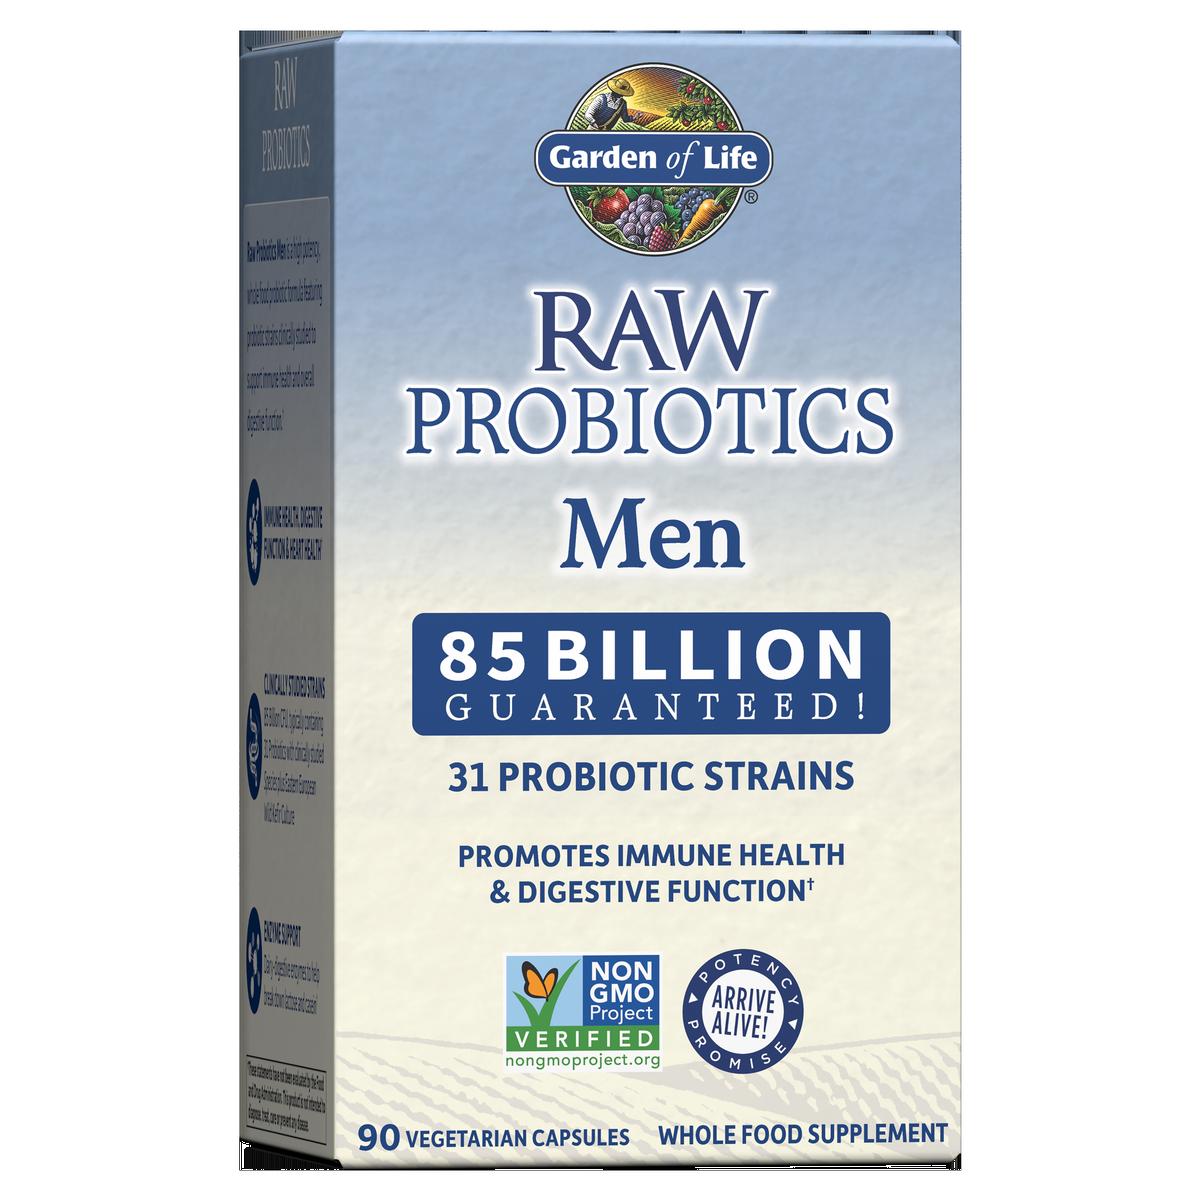 Primary image of Raw Probiotics Men